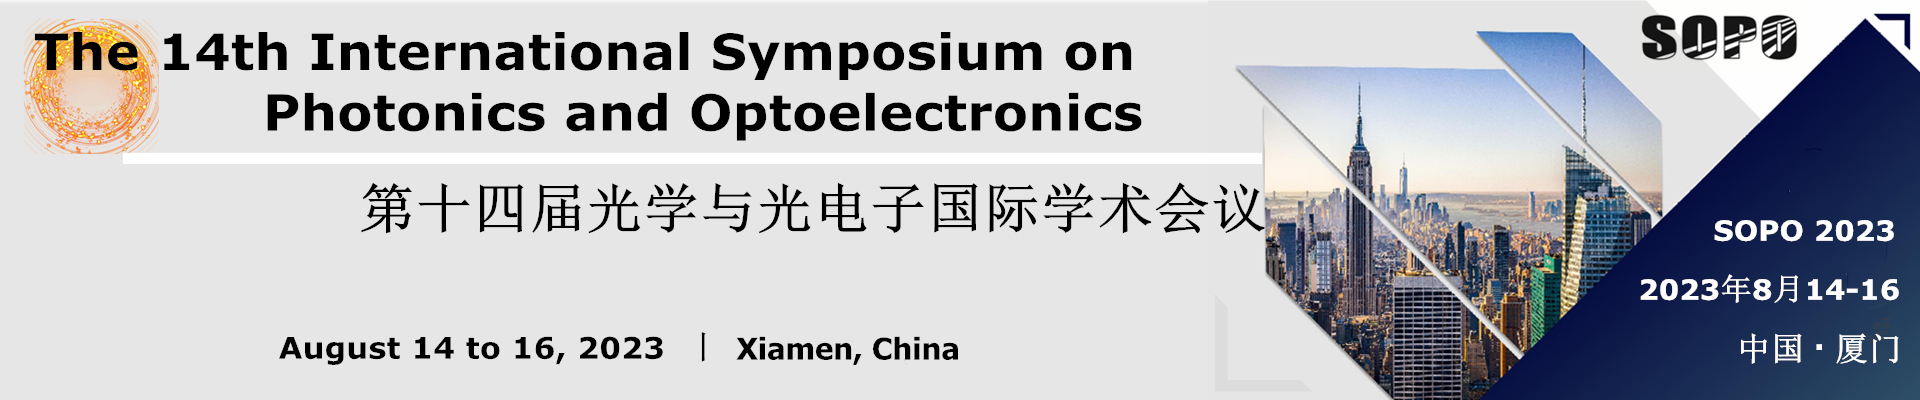 The 14th International Symposium on Photonics and Optoelectronics (SOPO 2023), Xiamen, Fujian, China